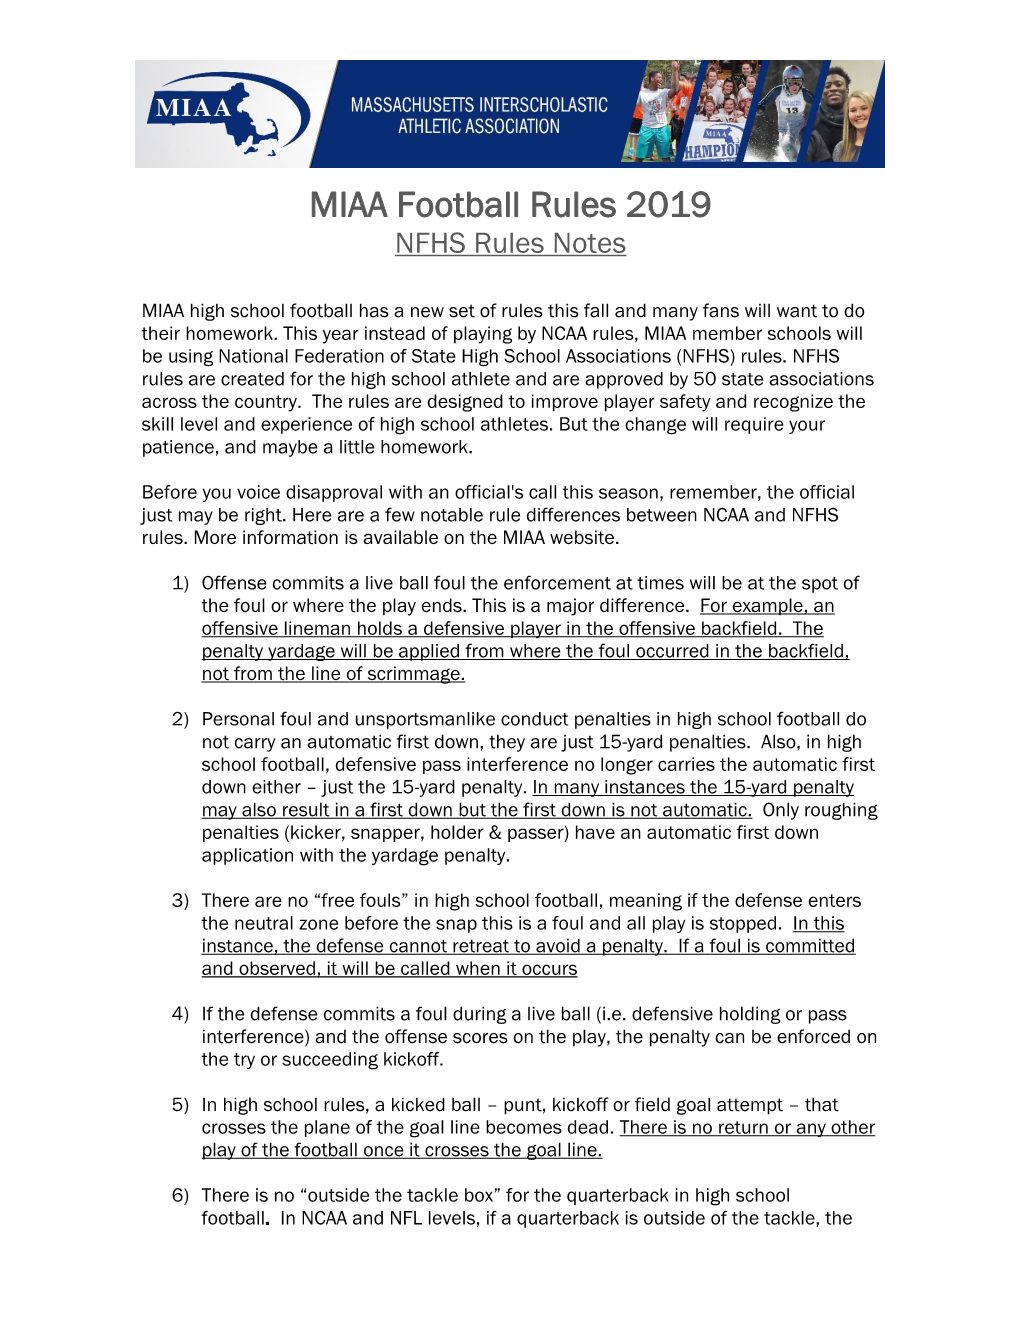 MIAA Football Rules 2019 NFHS Rules Notes